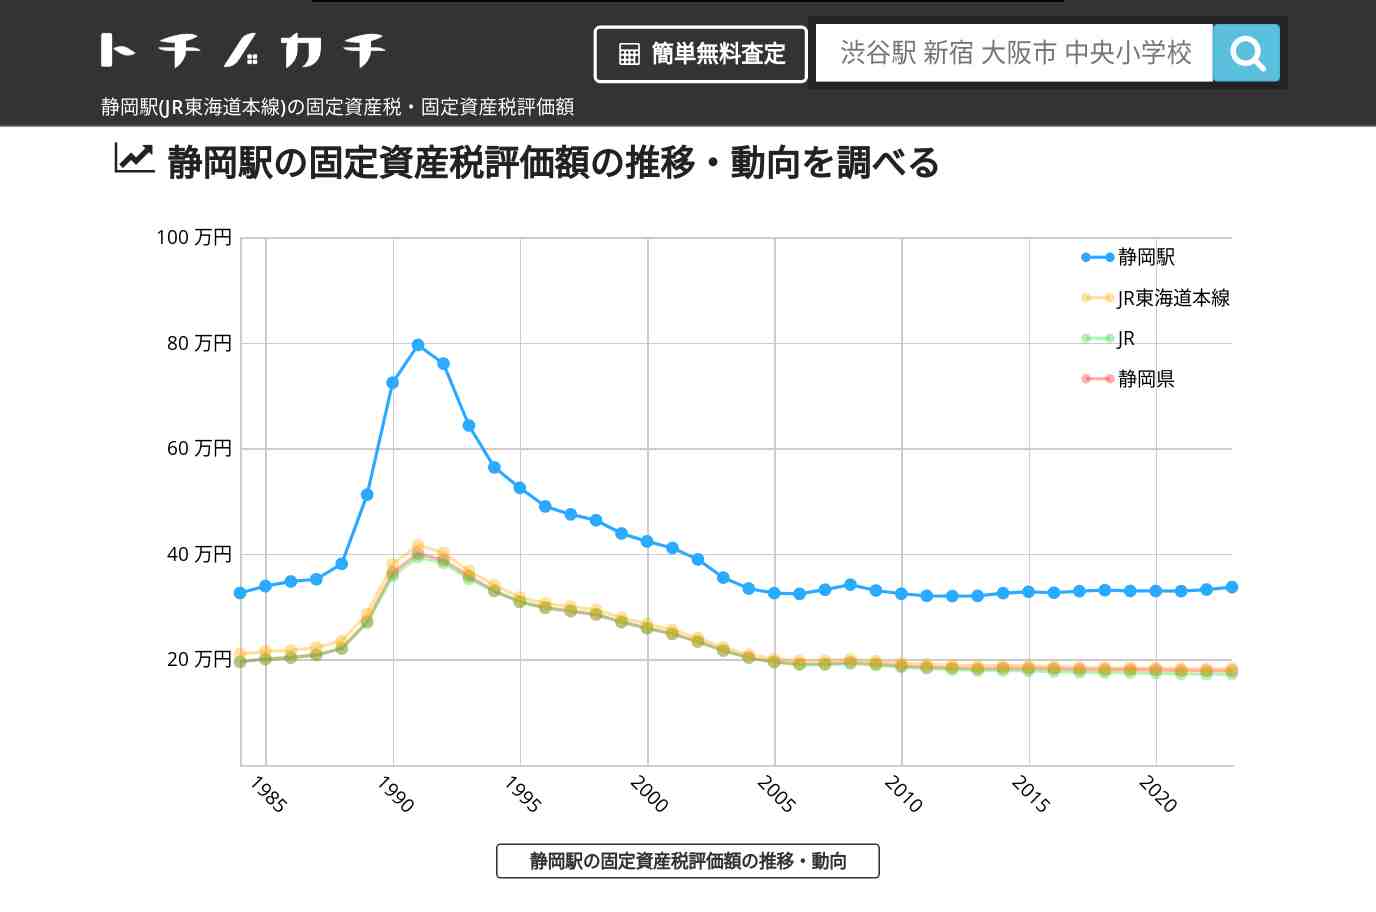 静岡駅(JR東海道本線)の固定資産税・固定資産税評価額 | トチノカチ